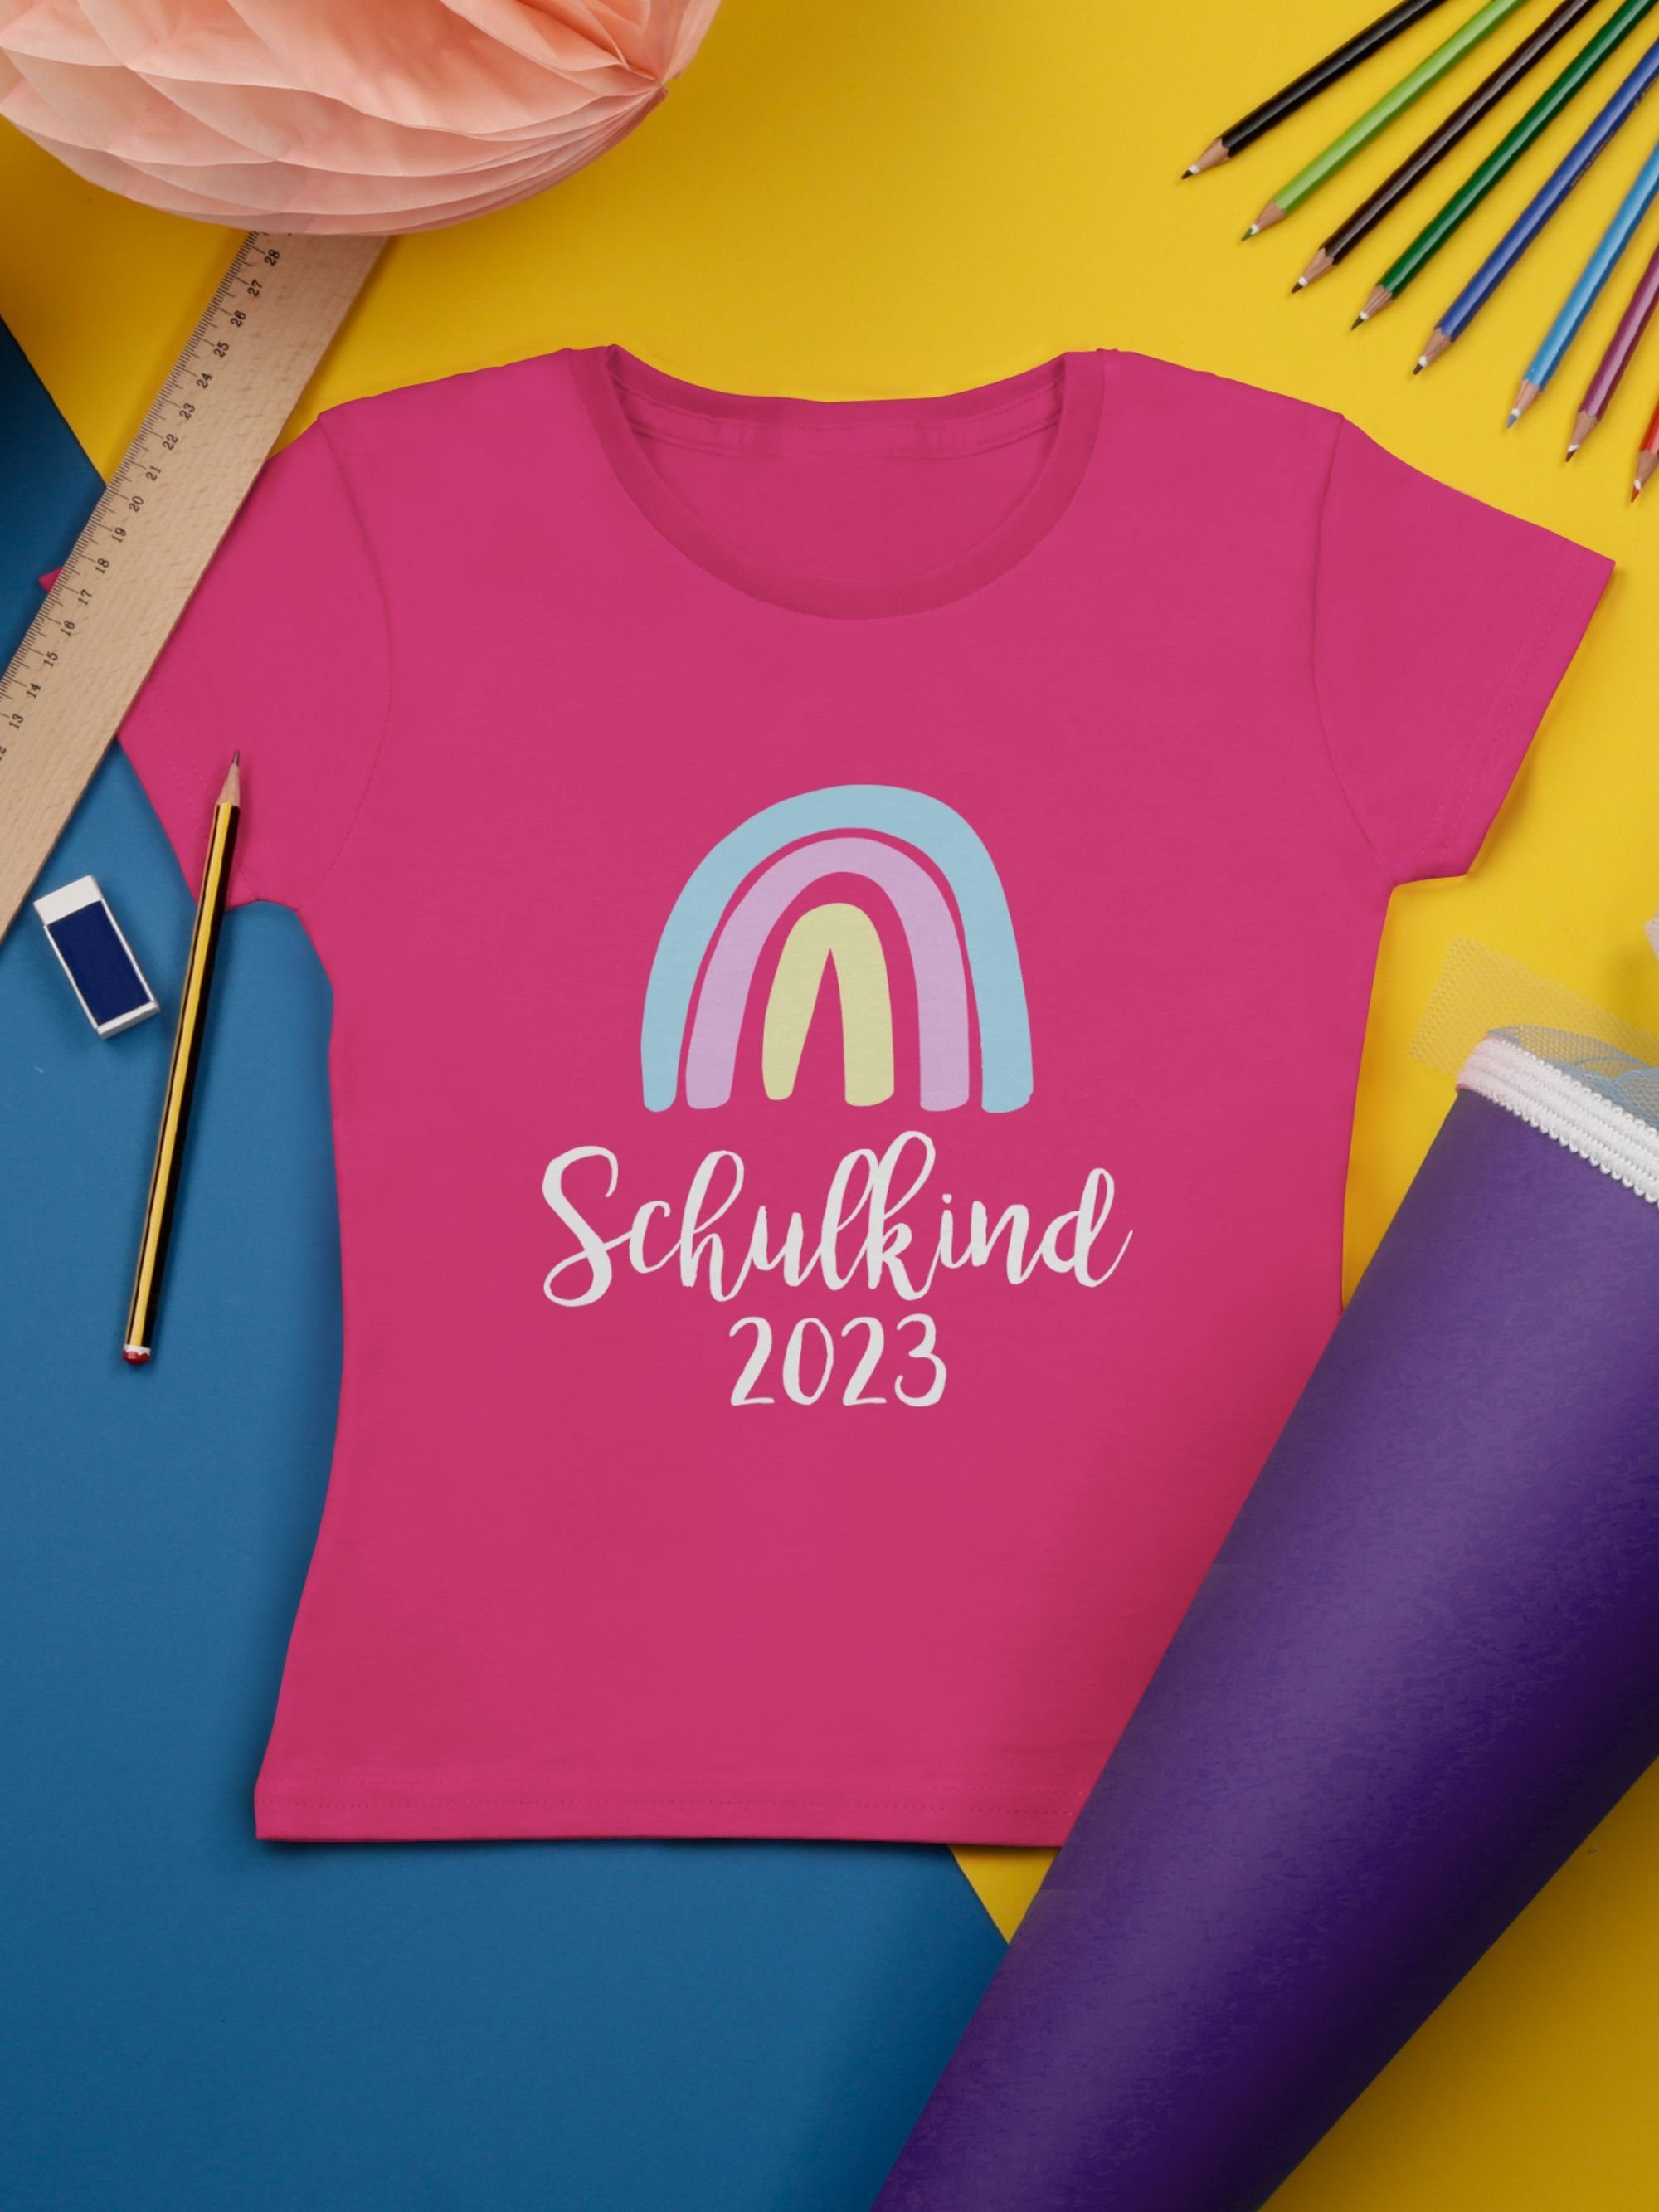 Einschulung T-Shirt Mädchen 2023 1 Schulkind Fuchsia / Pastell Weiß Regenbogen Shirtracer